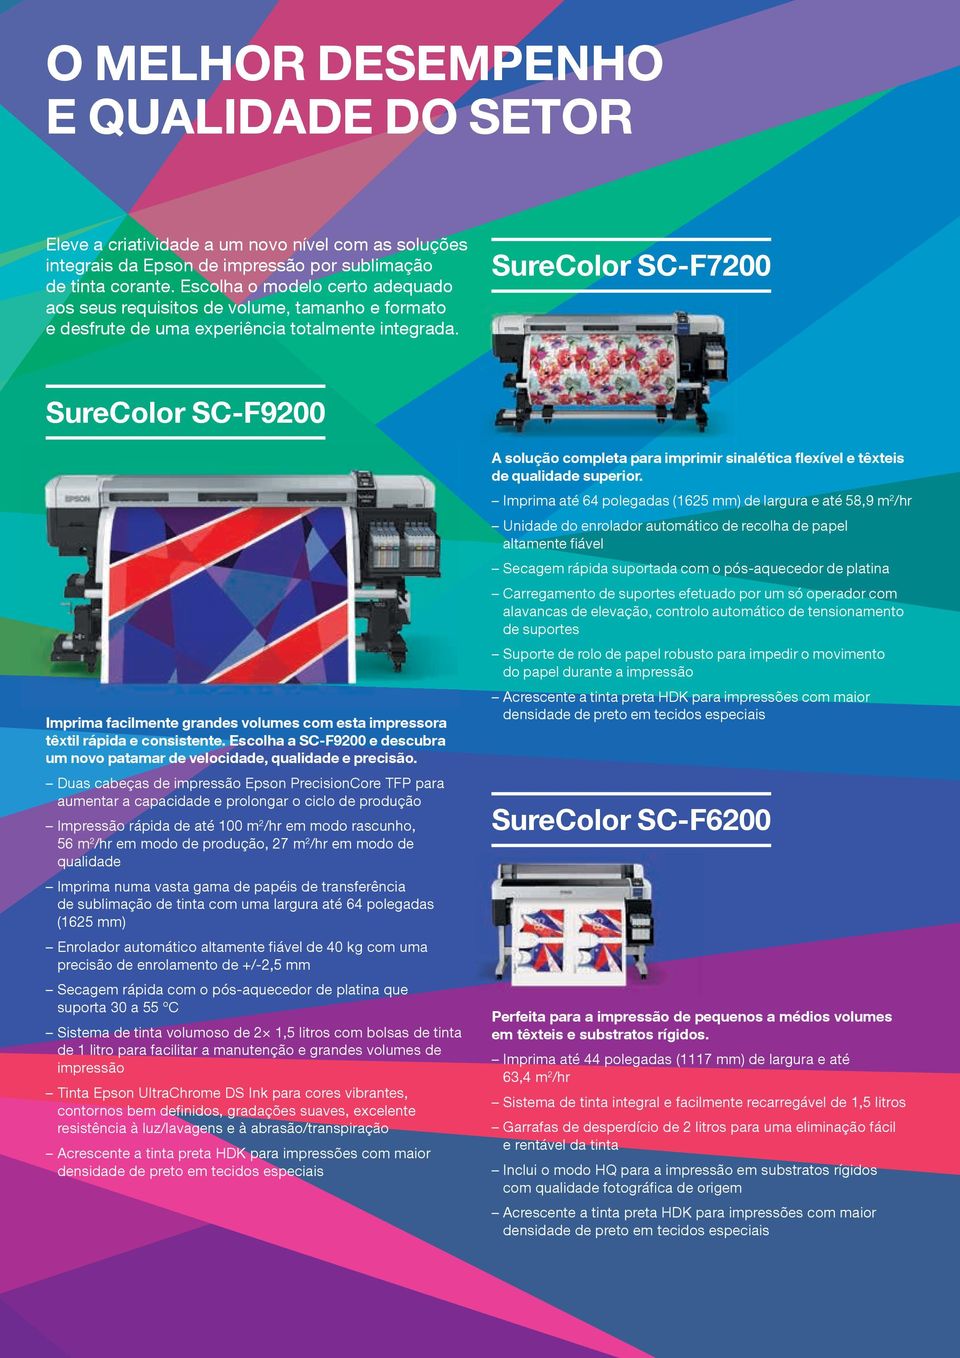 SureColor SC-F7200 SureColor SC-F9200 Imprima facilmente grandes volumes com esta impressora têxtil rápida e consistente.